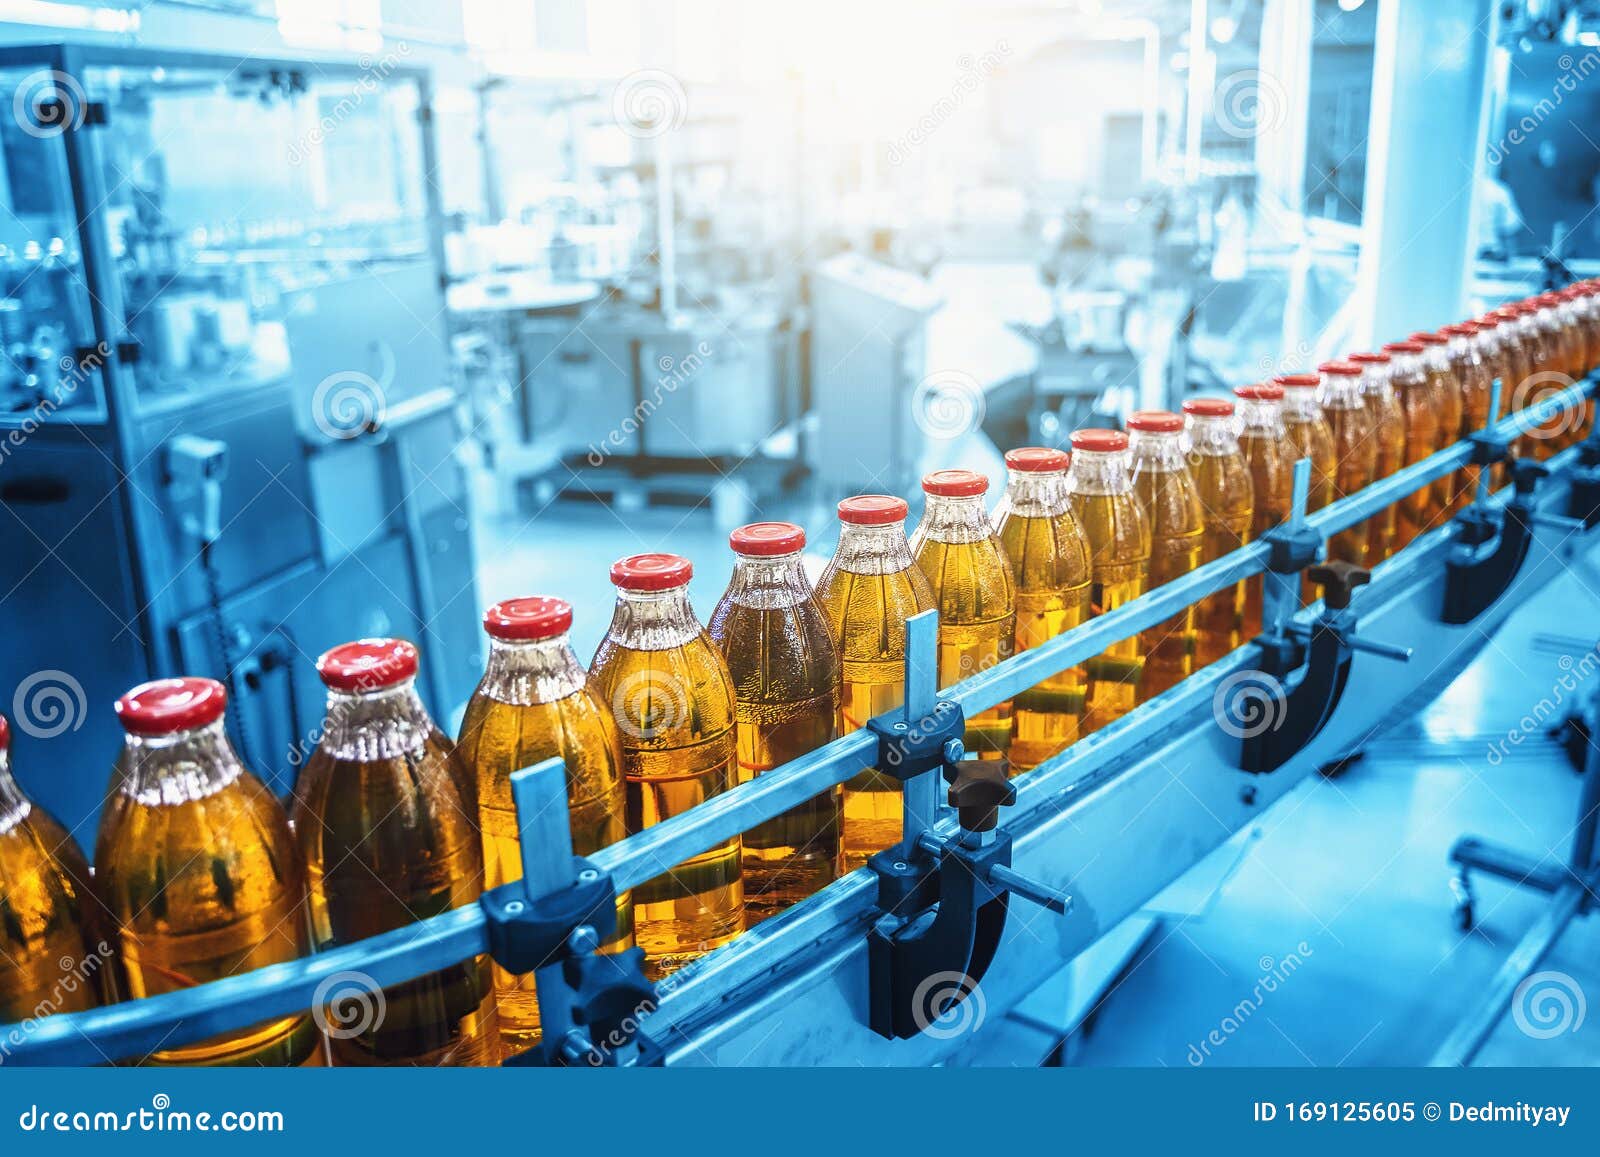 industrial interior of natural juice plant production in blue color. conveyor belt, filled bottles on beverage factory